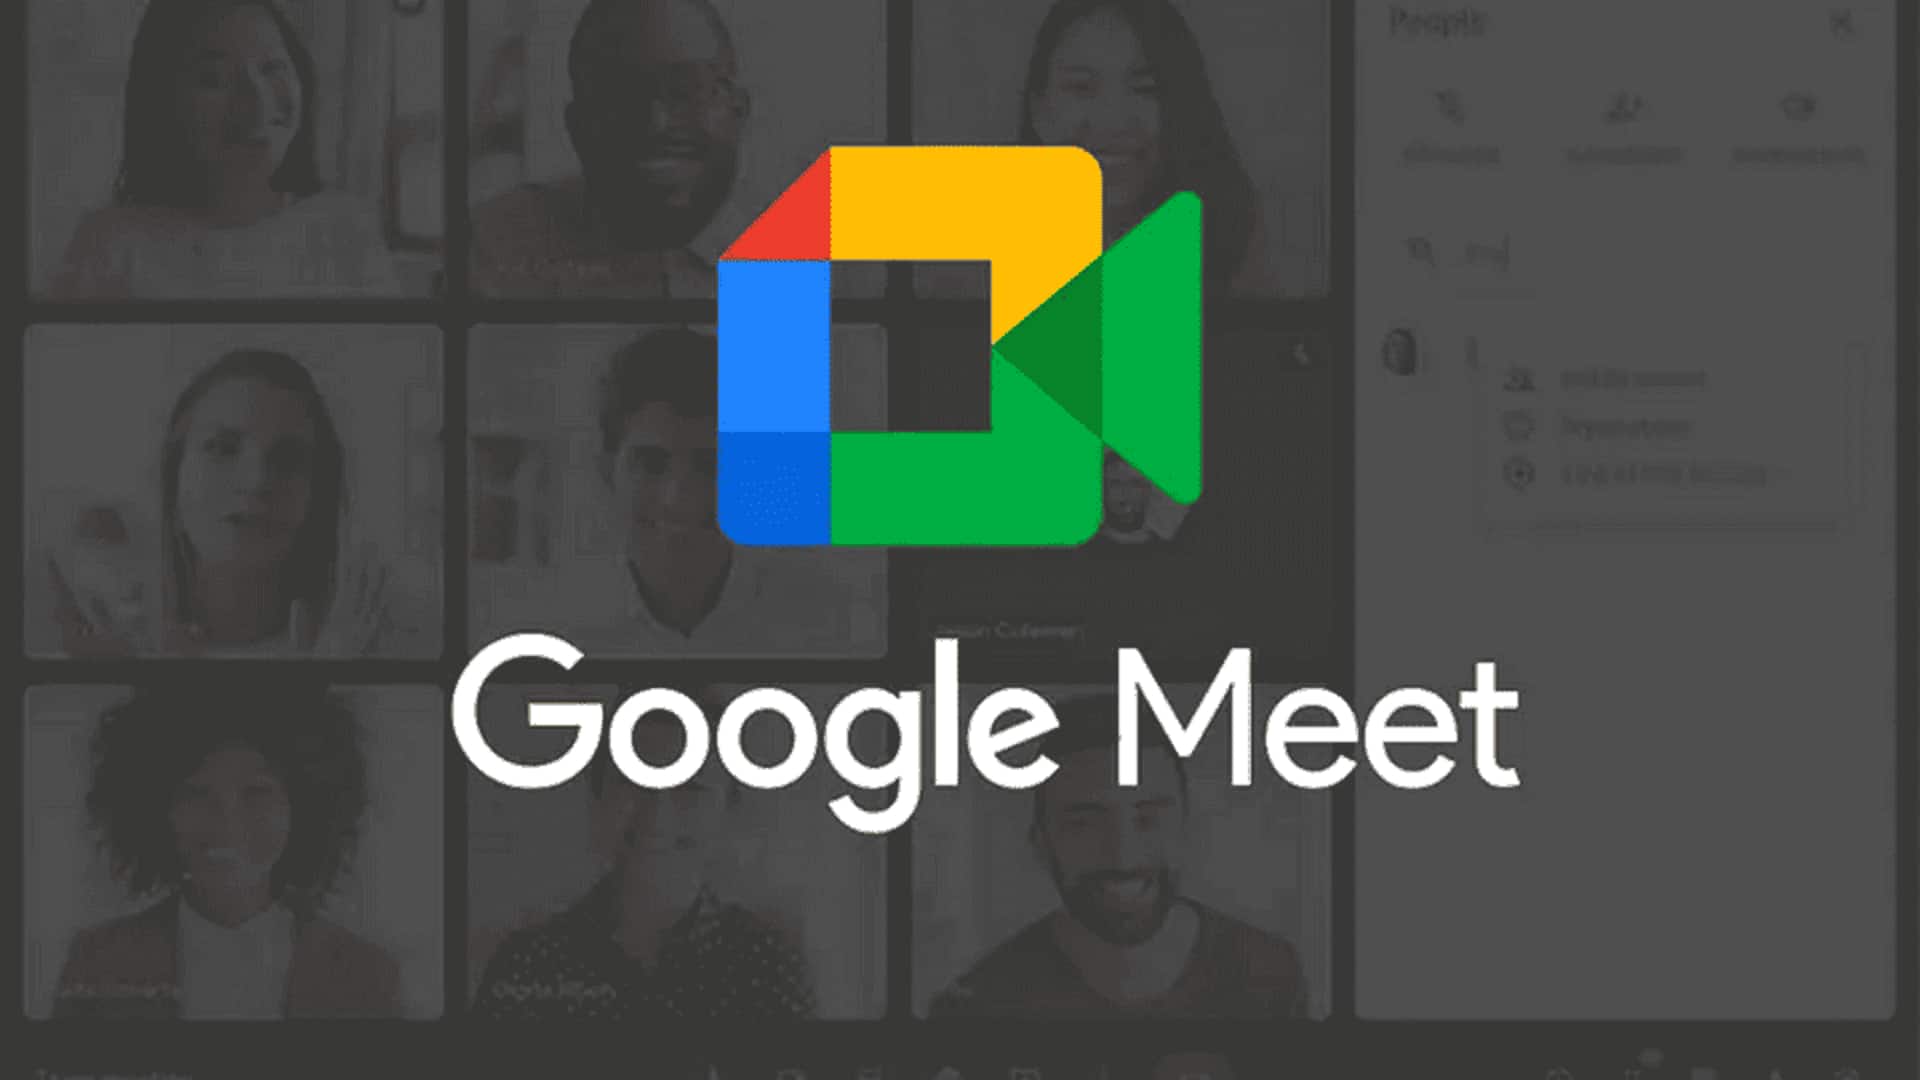 Google Meet has made video calling more fun: Here's how